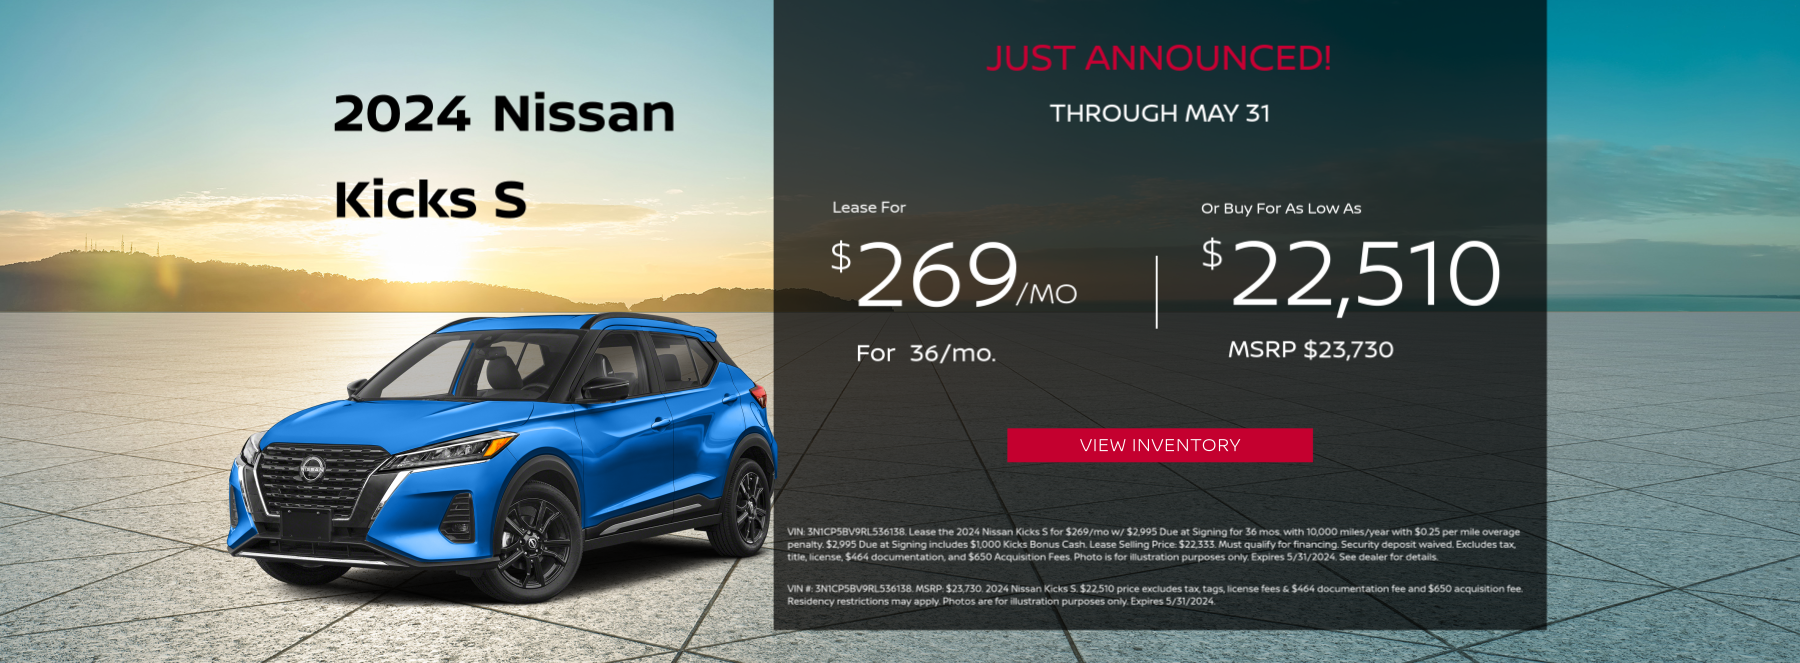 2024 Nissan Kicks Offer